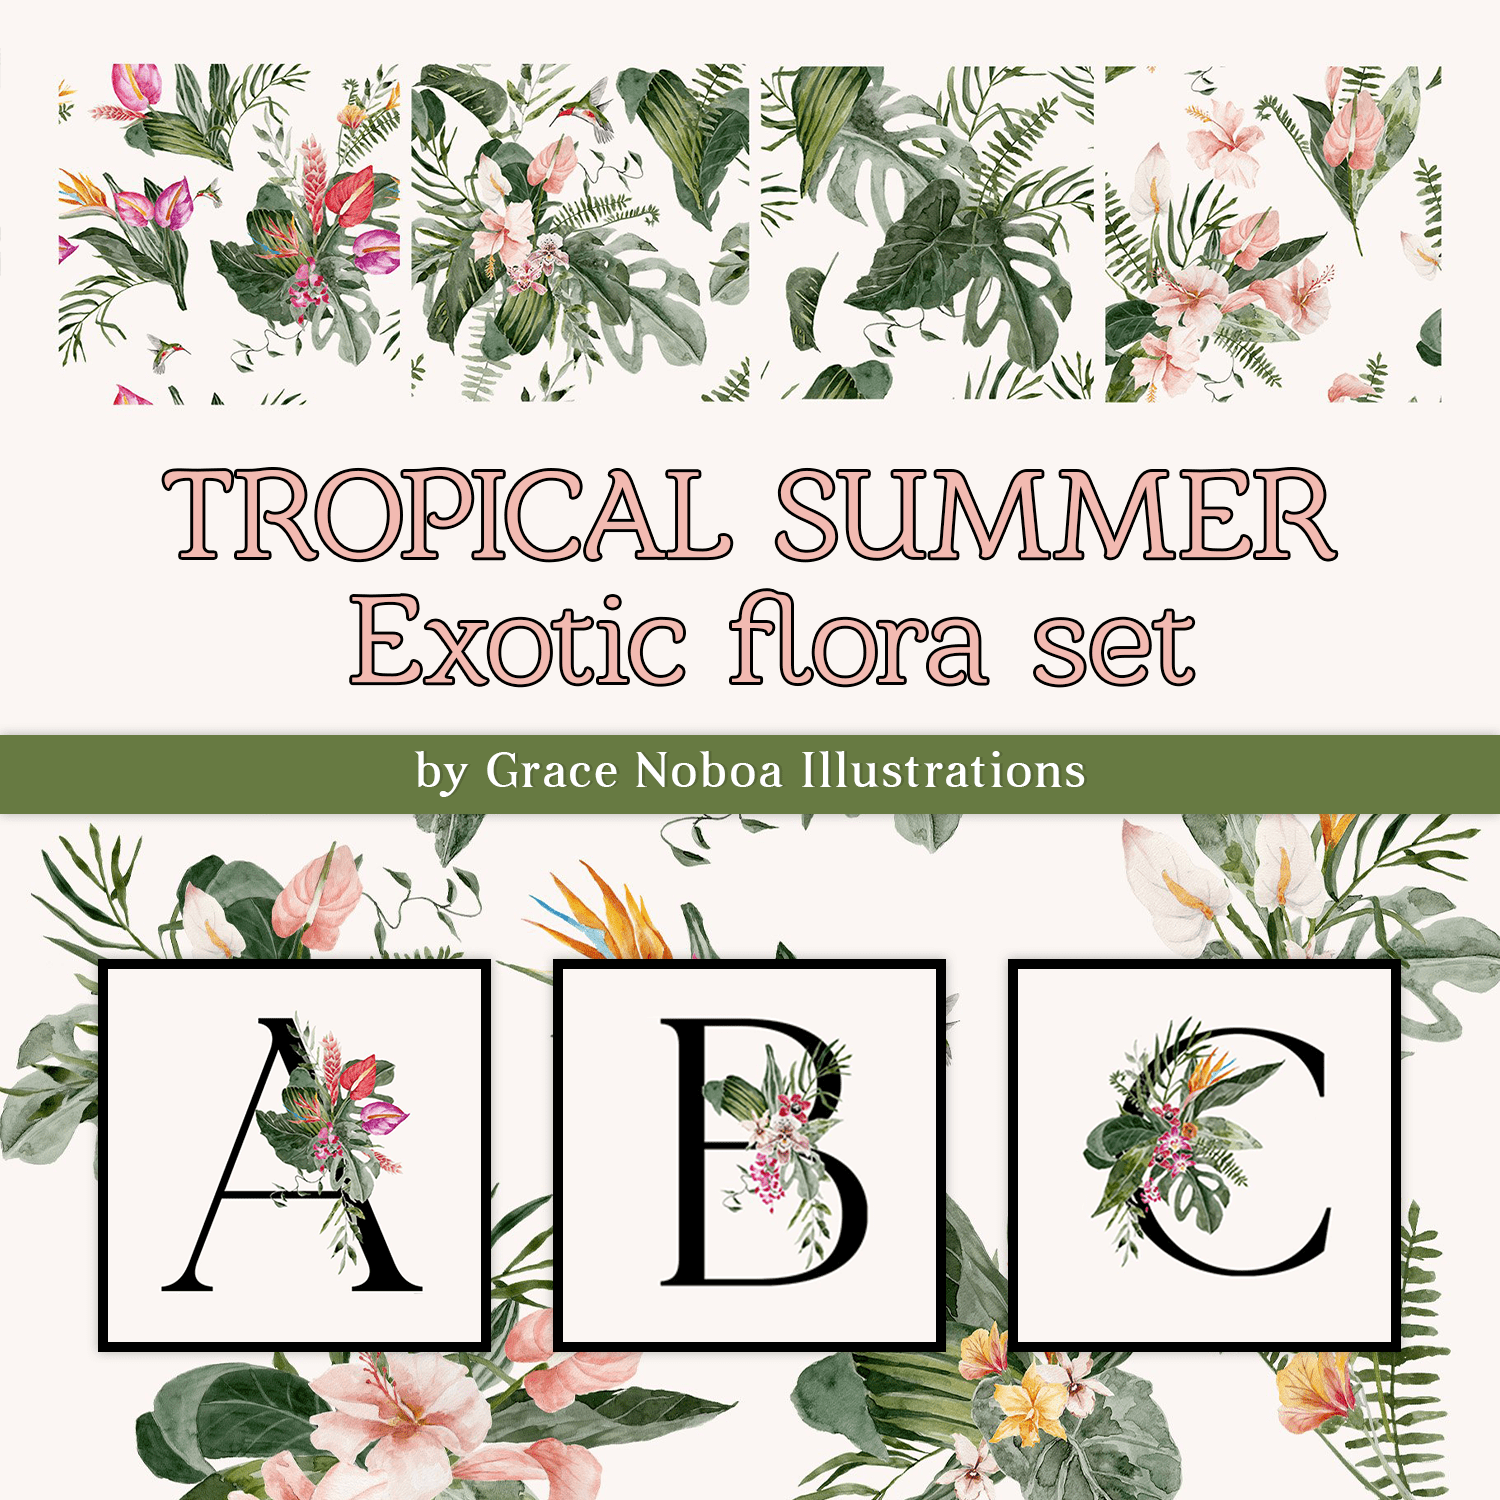 TROPICAL SUMMER- Exotic flora set cover.